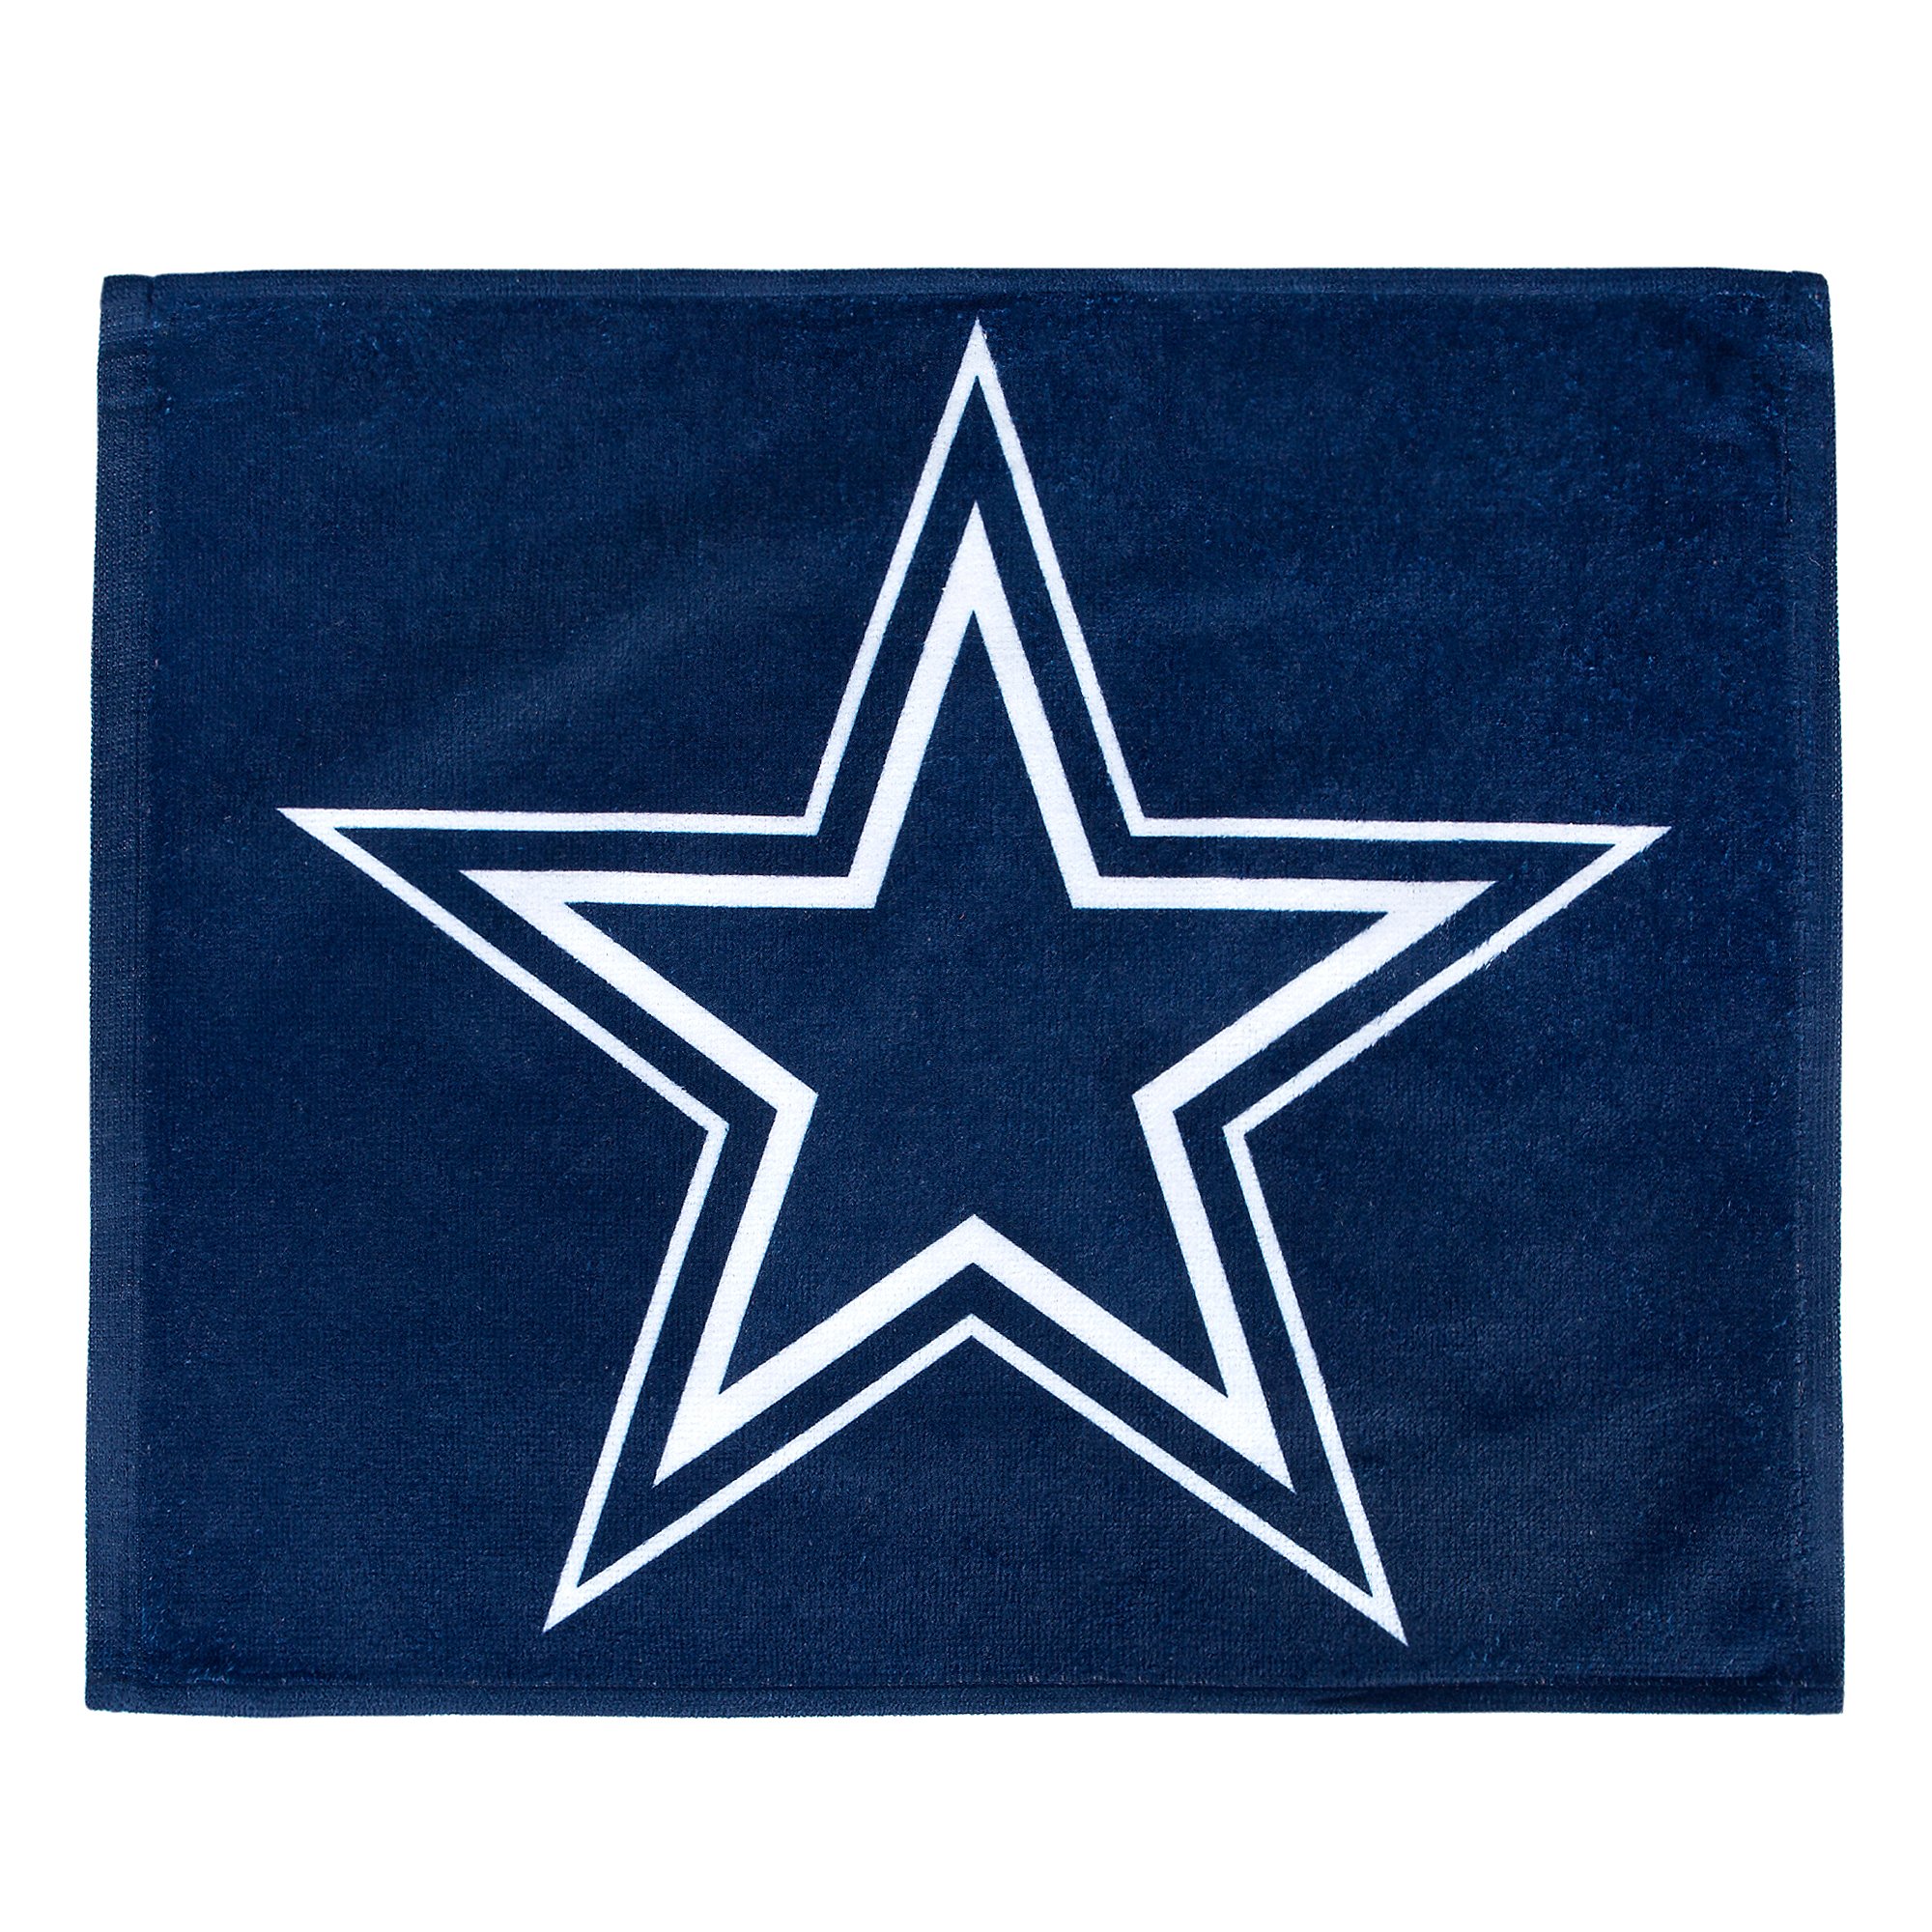 Dallascowboys Star / Dallas Cowboys Star Logos : See more ideas about ...